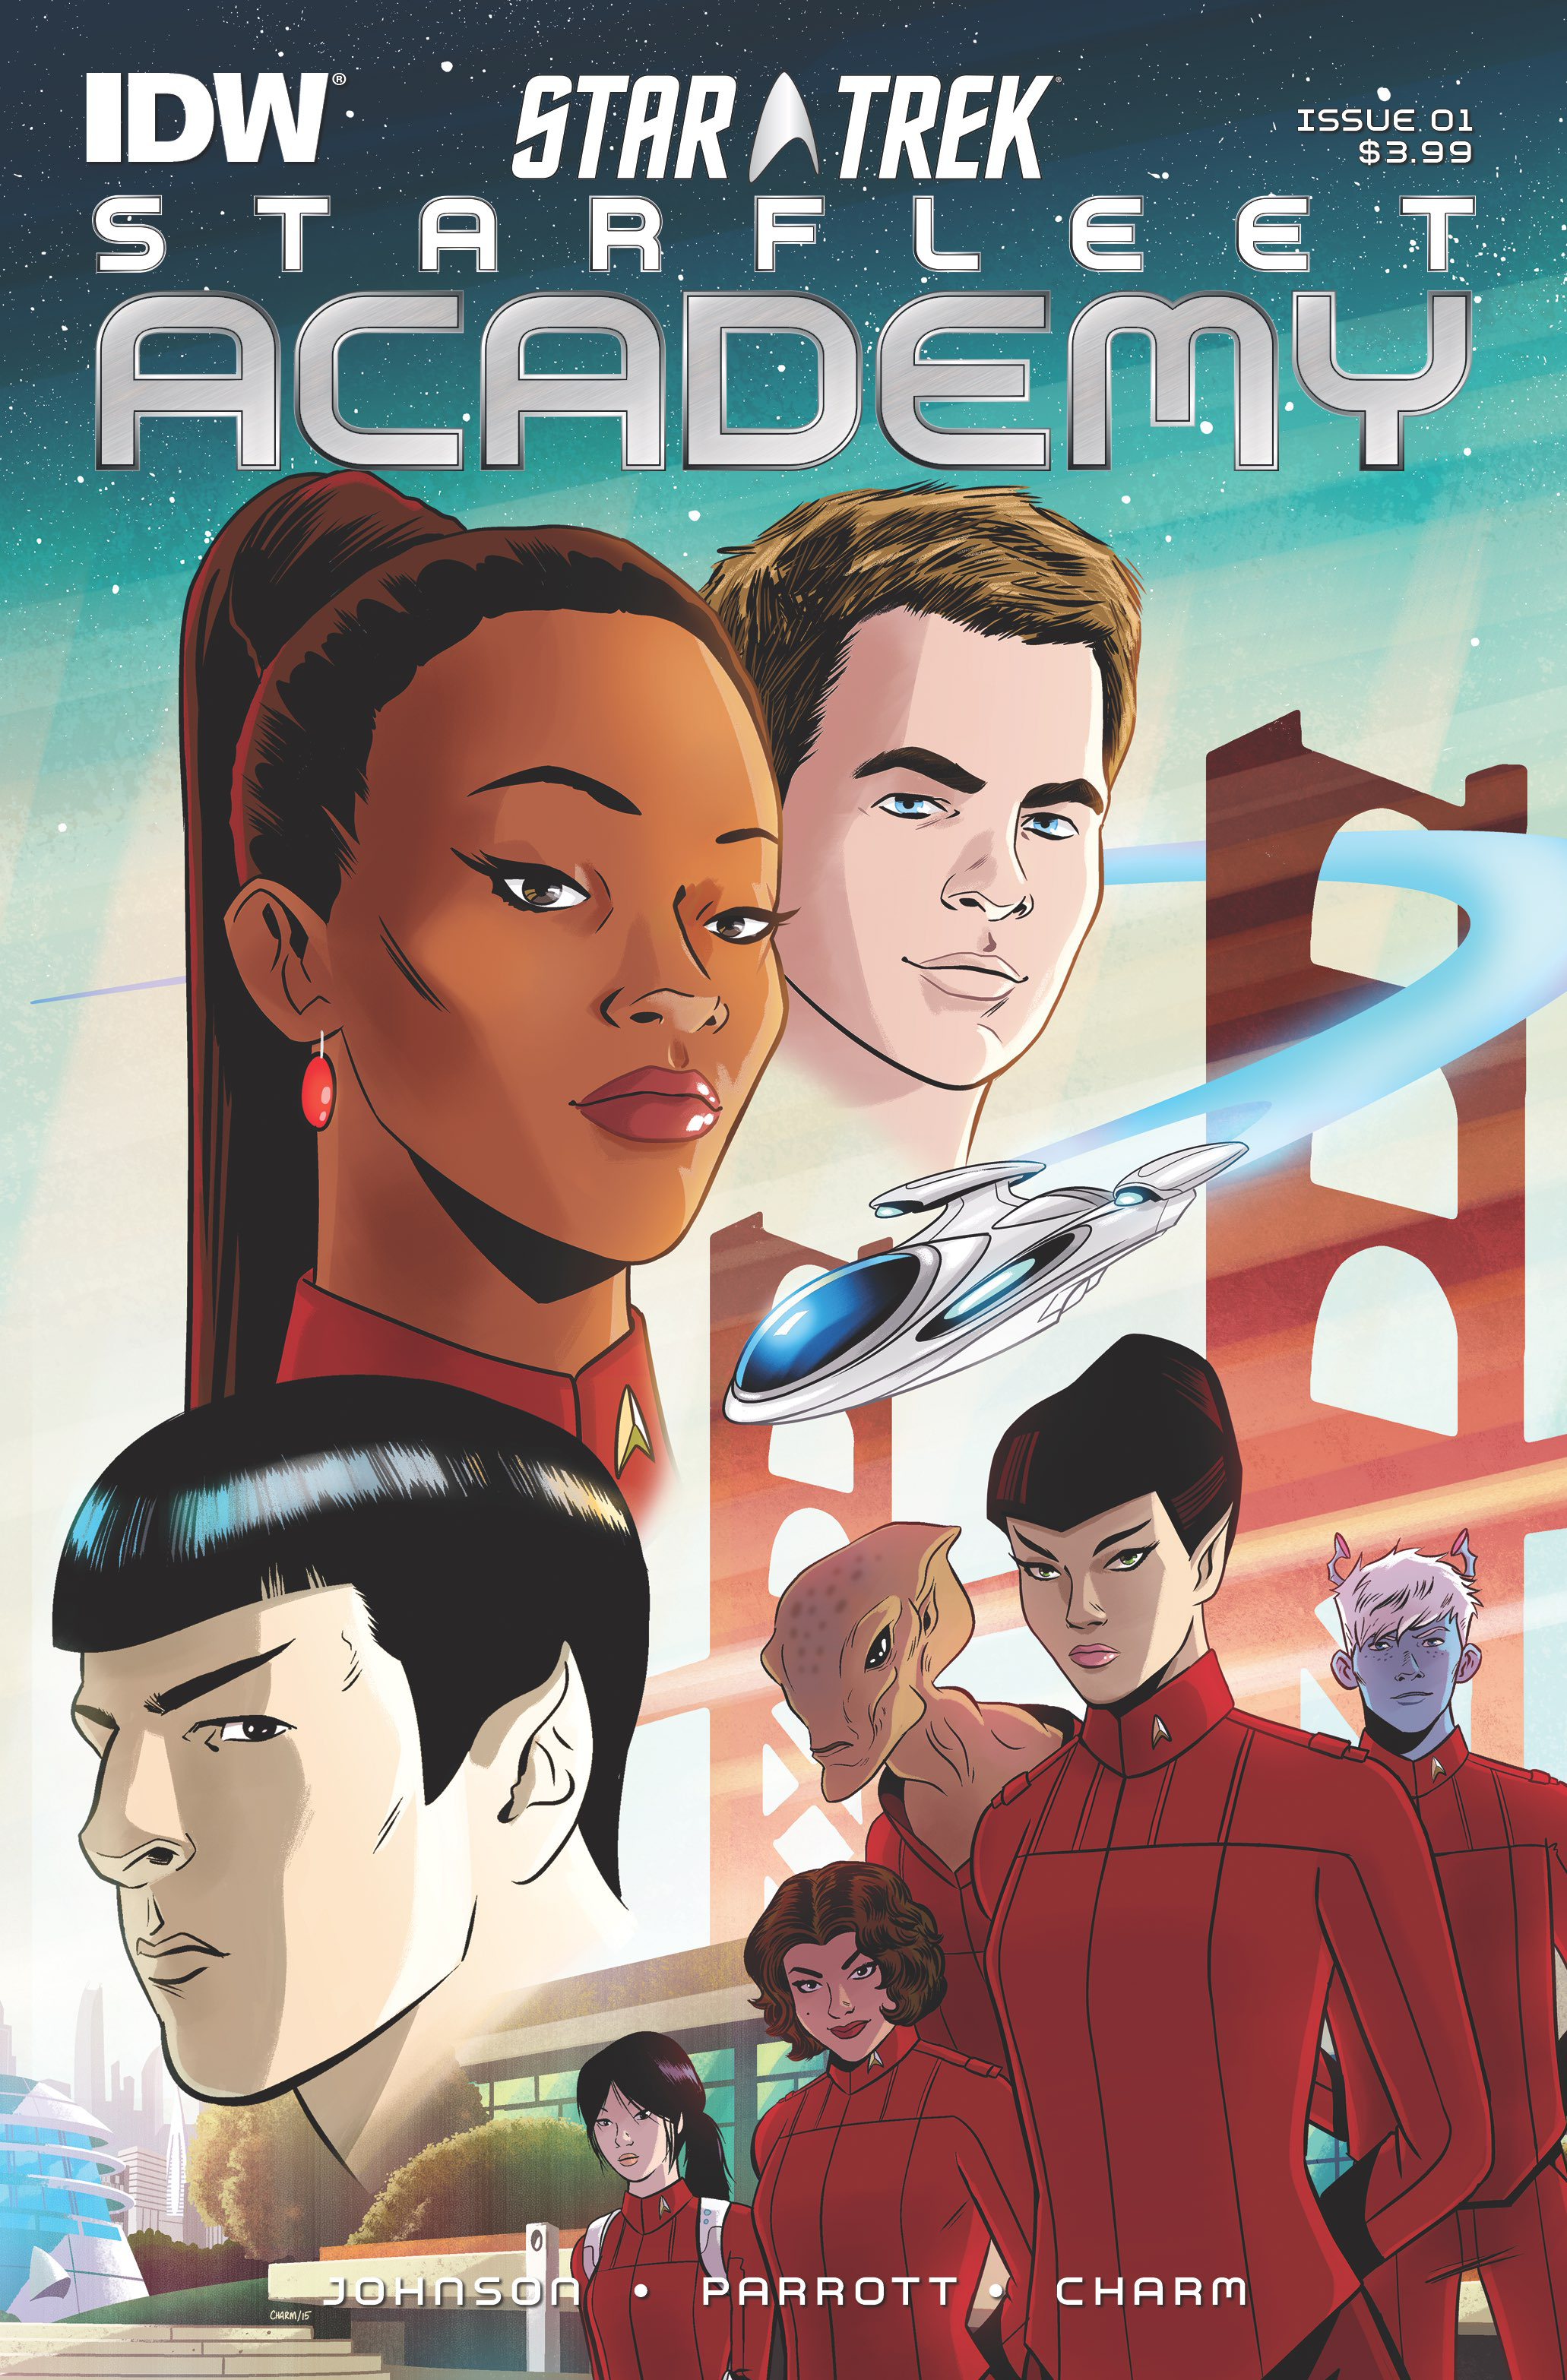 Star Trek: Starfleet Academy (IDW, 2015 series) #1